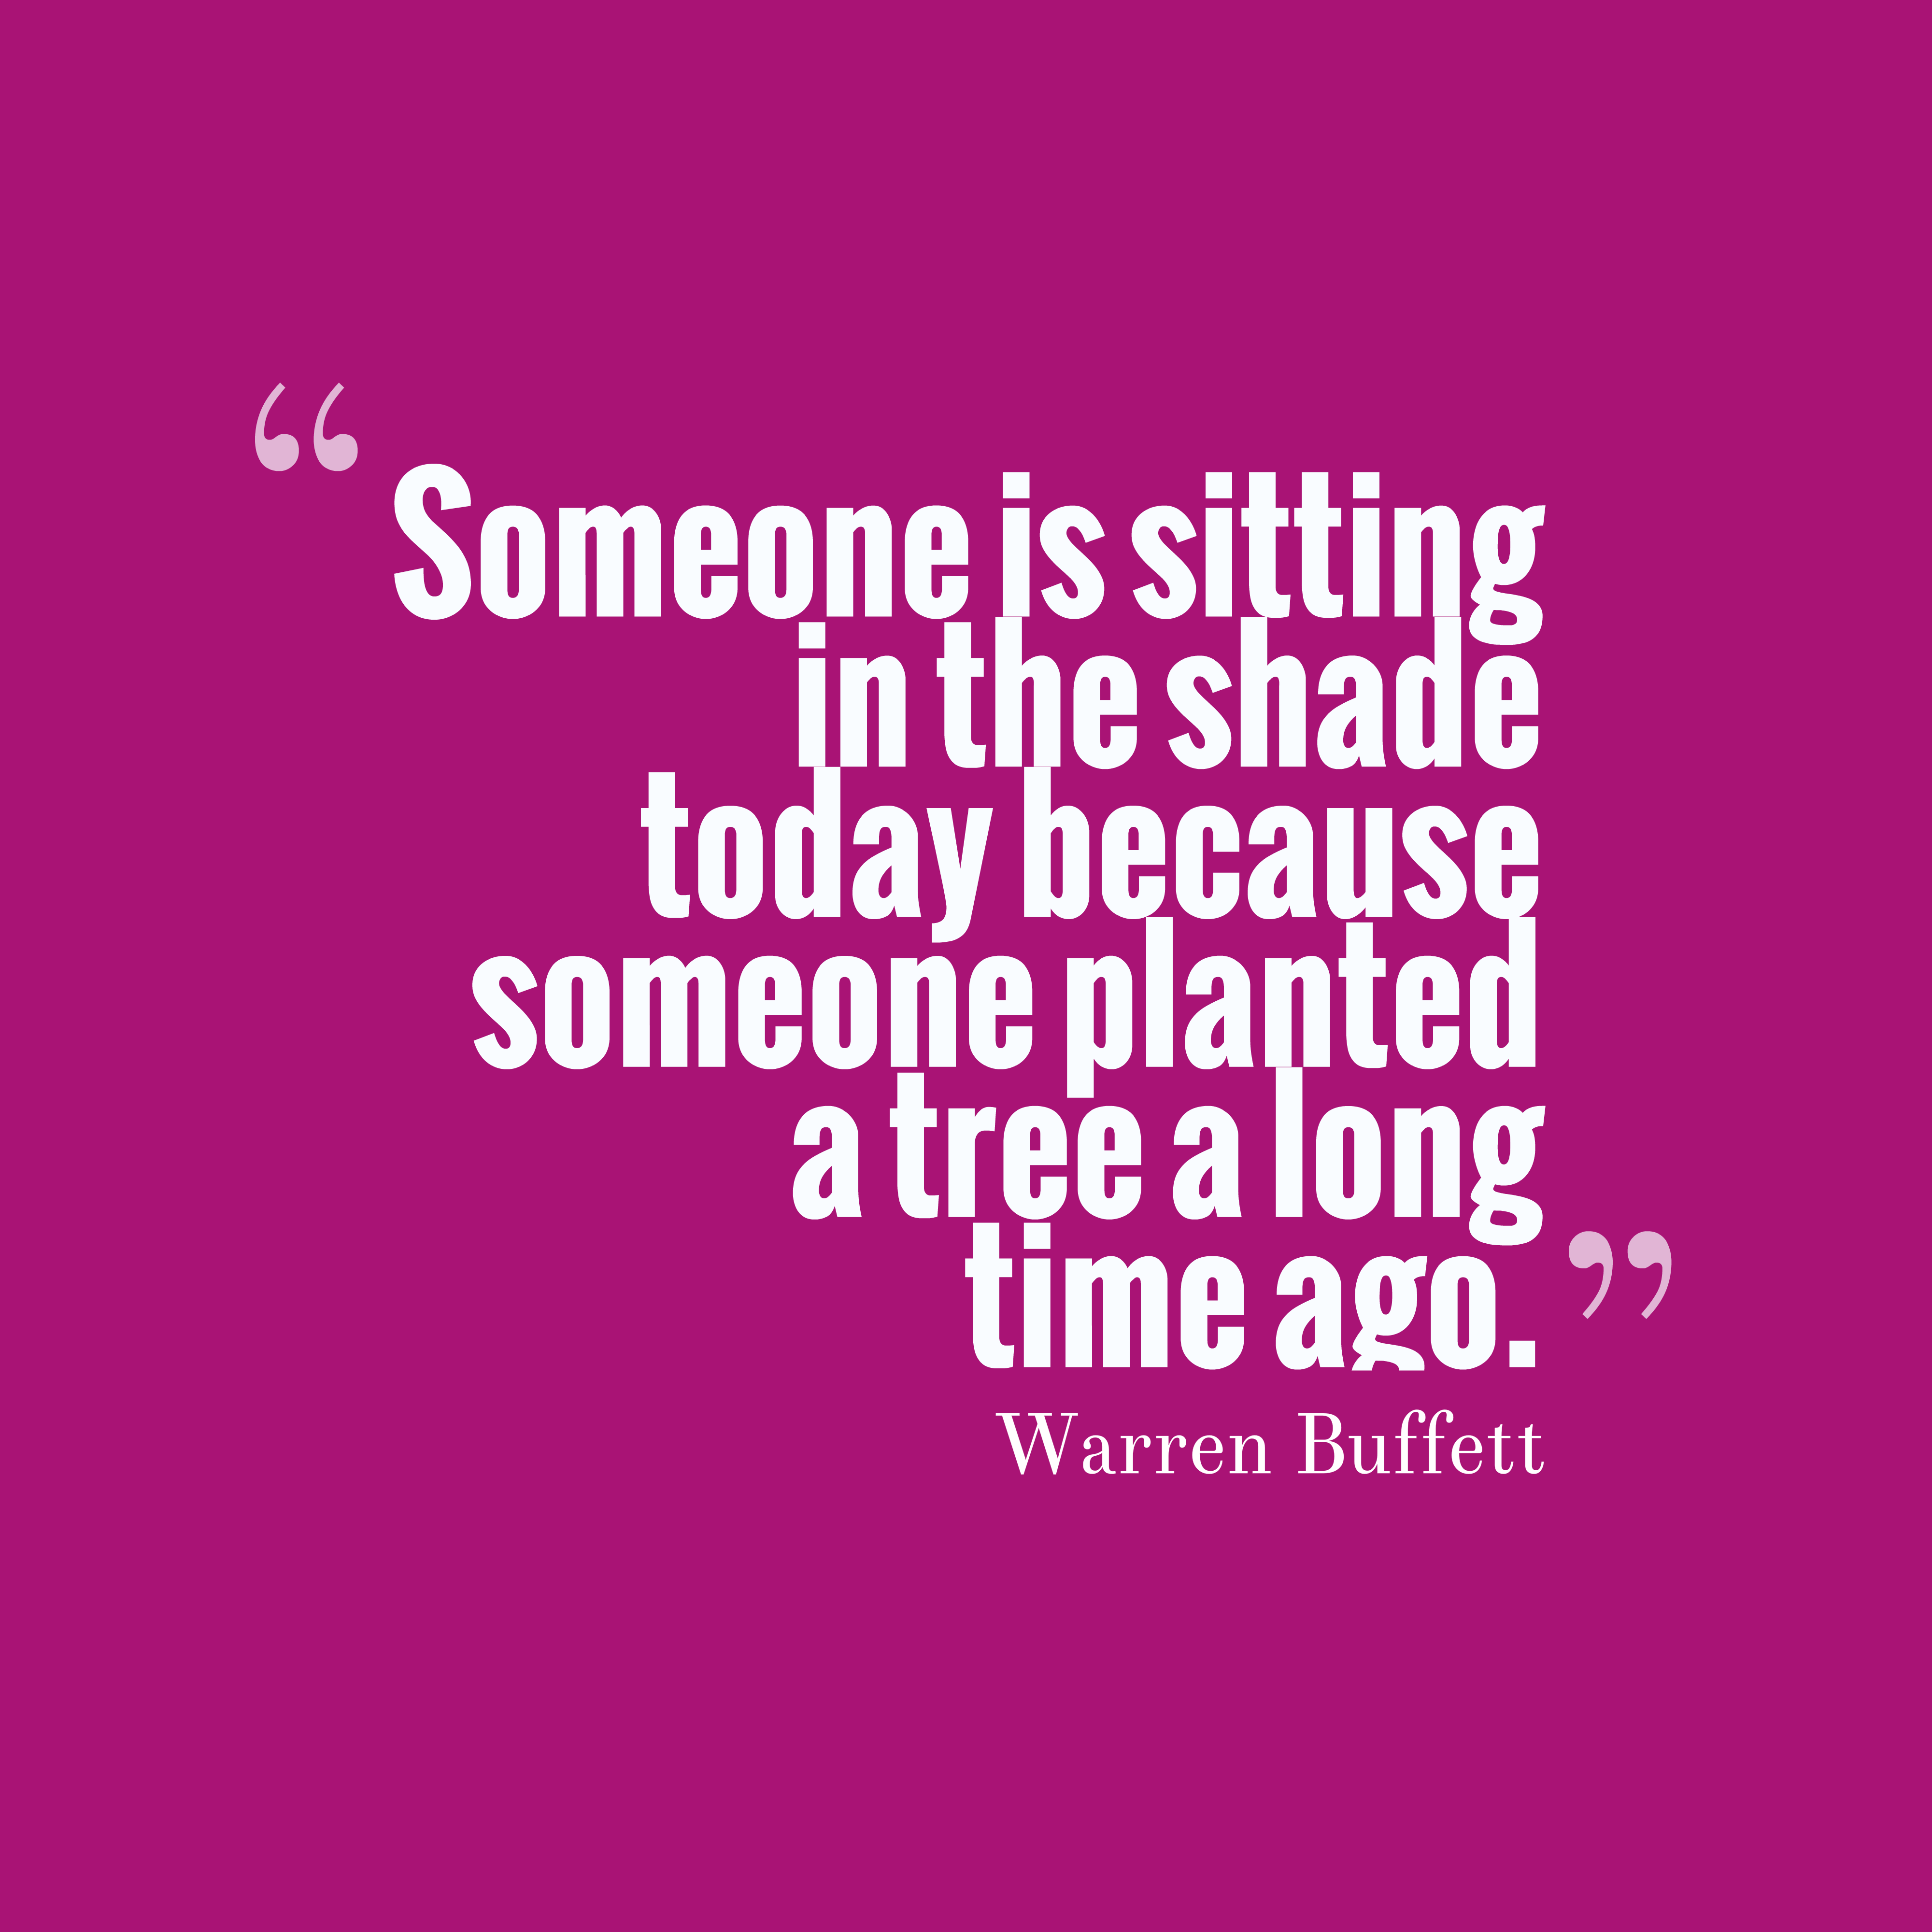 Warren Buffett quote about time